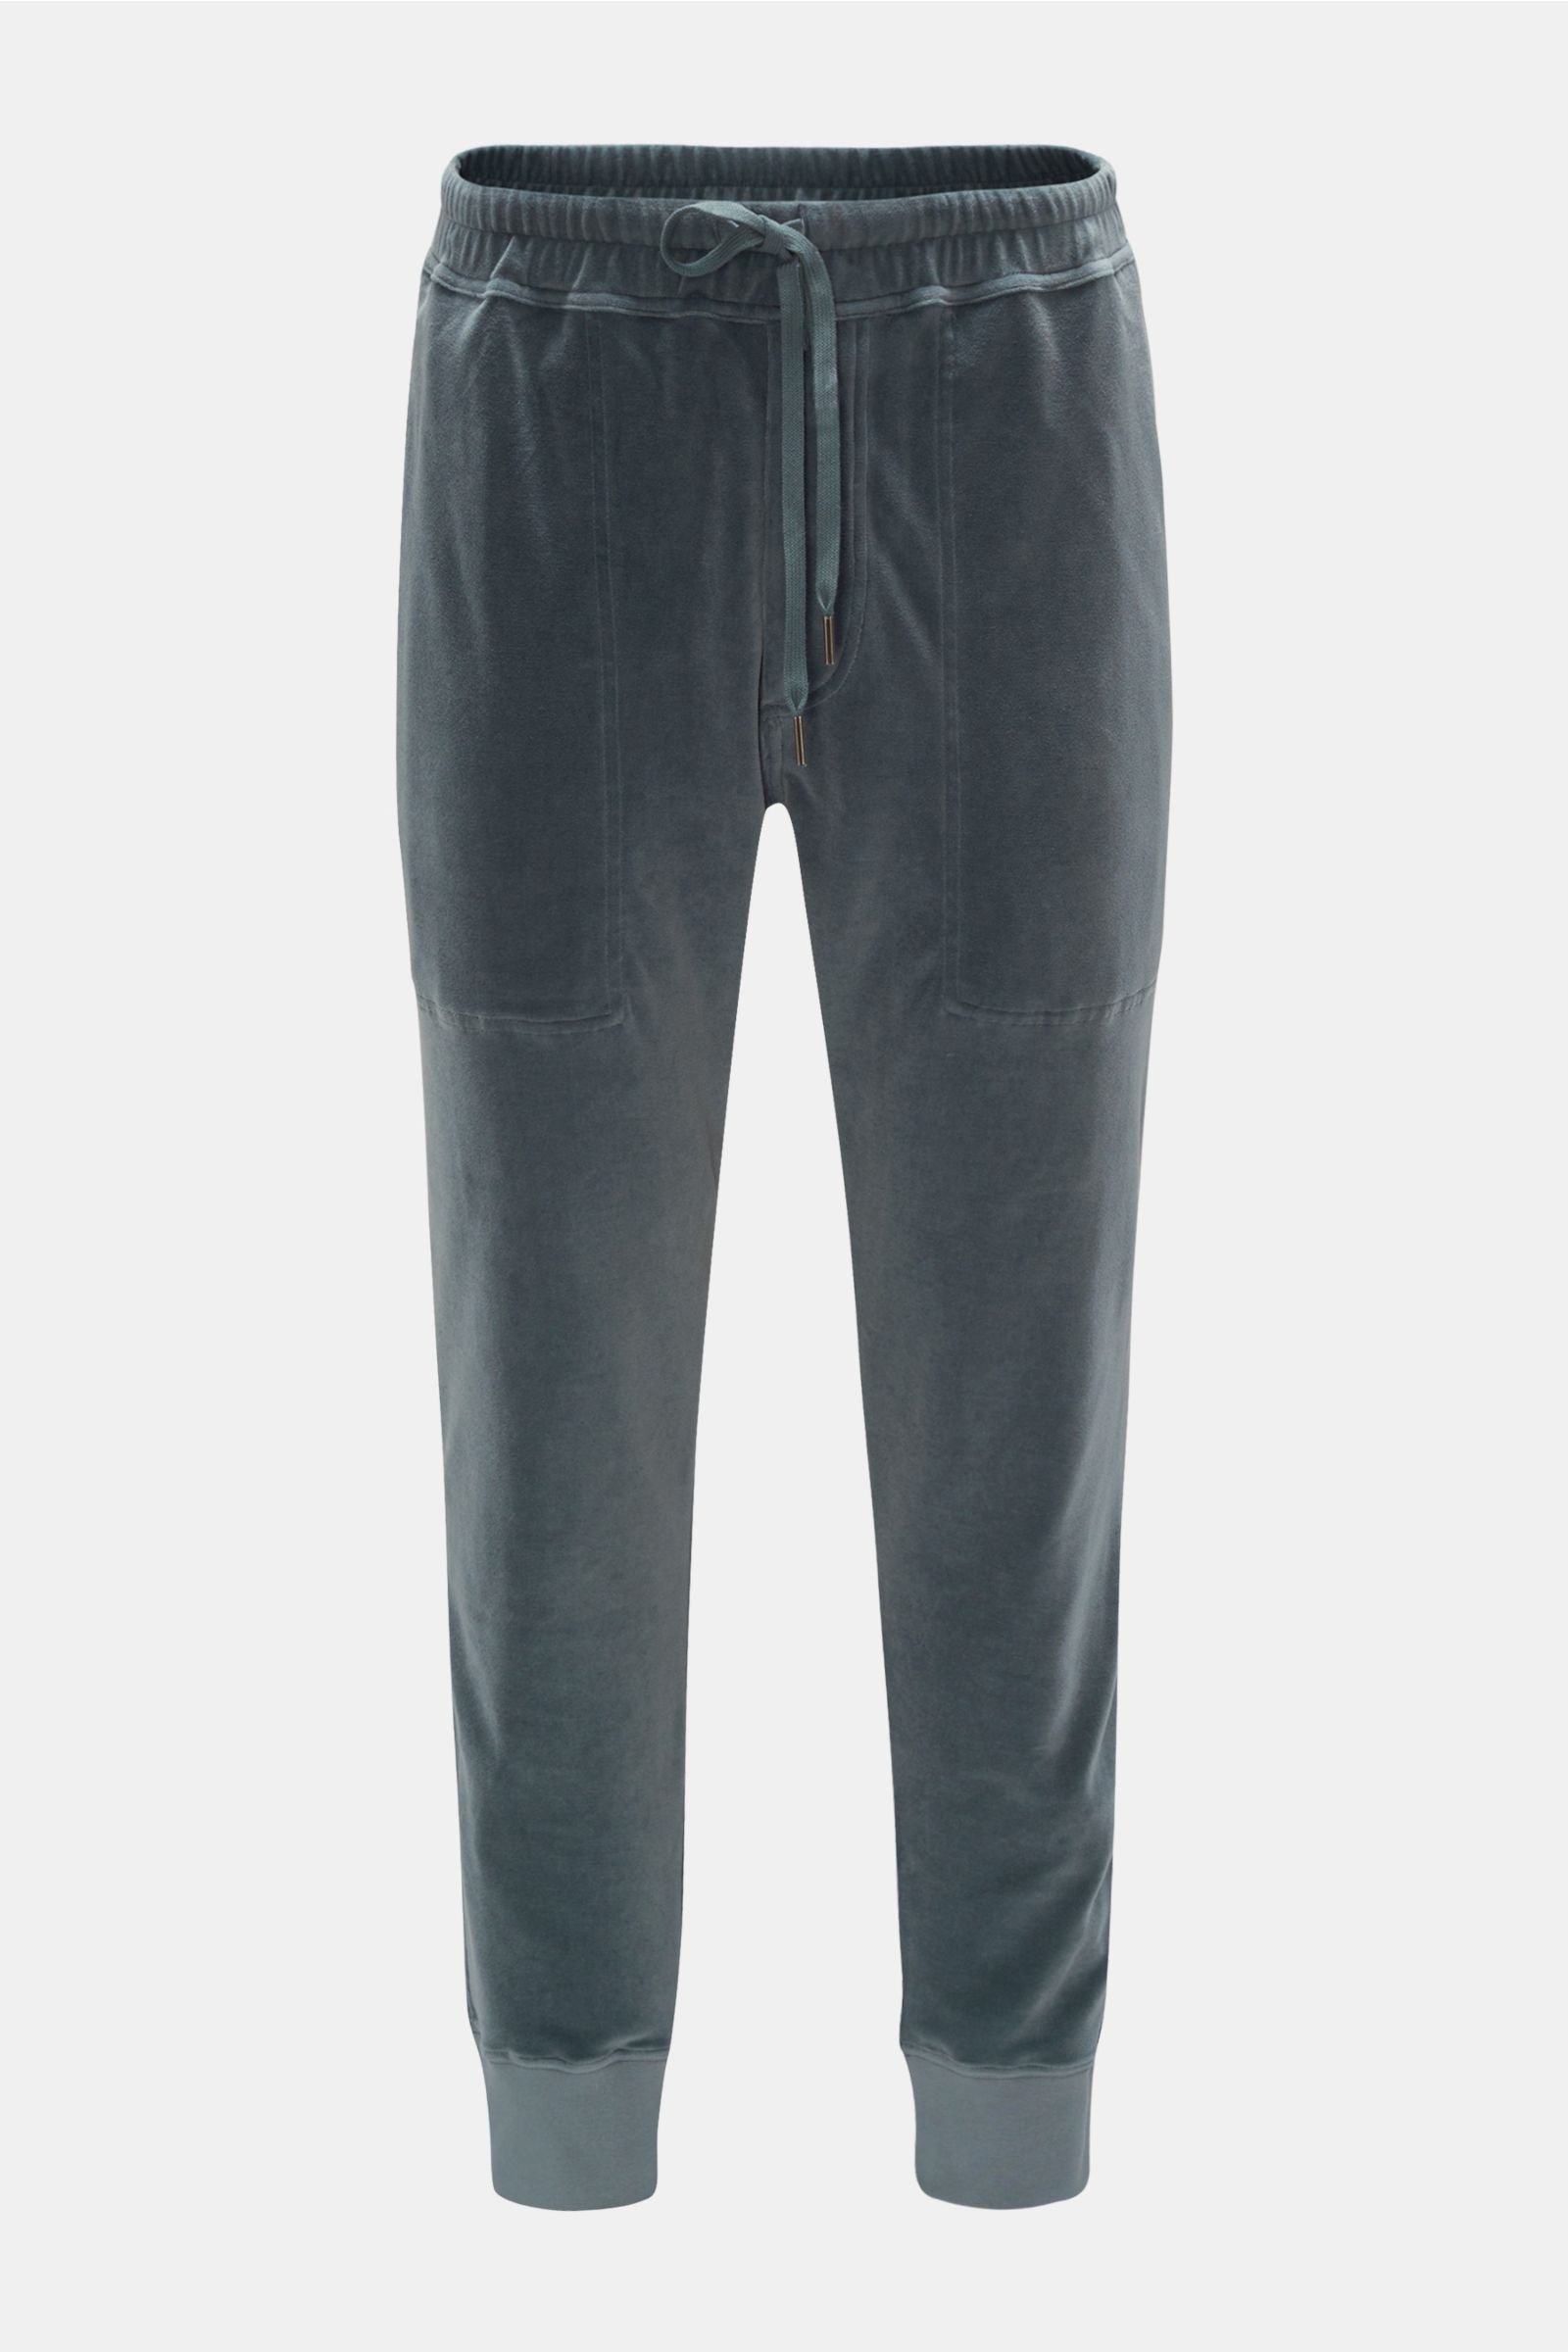 Sweat pants grey-blue